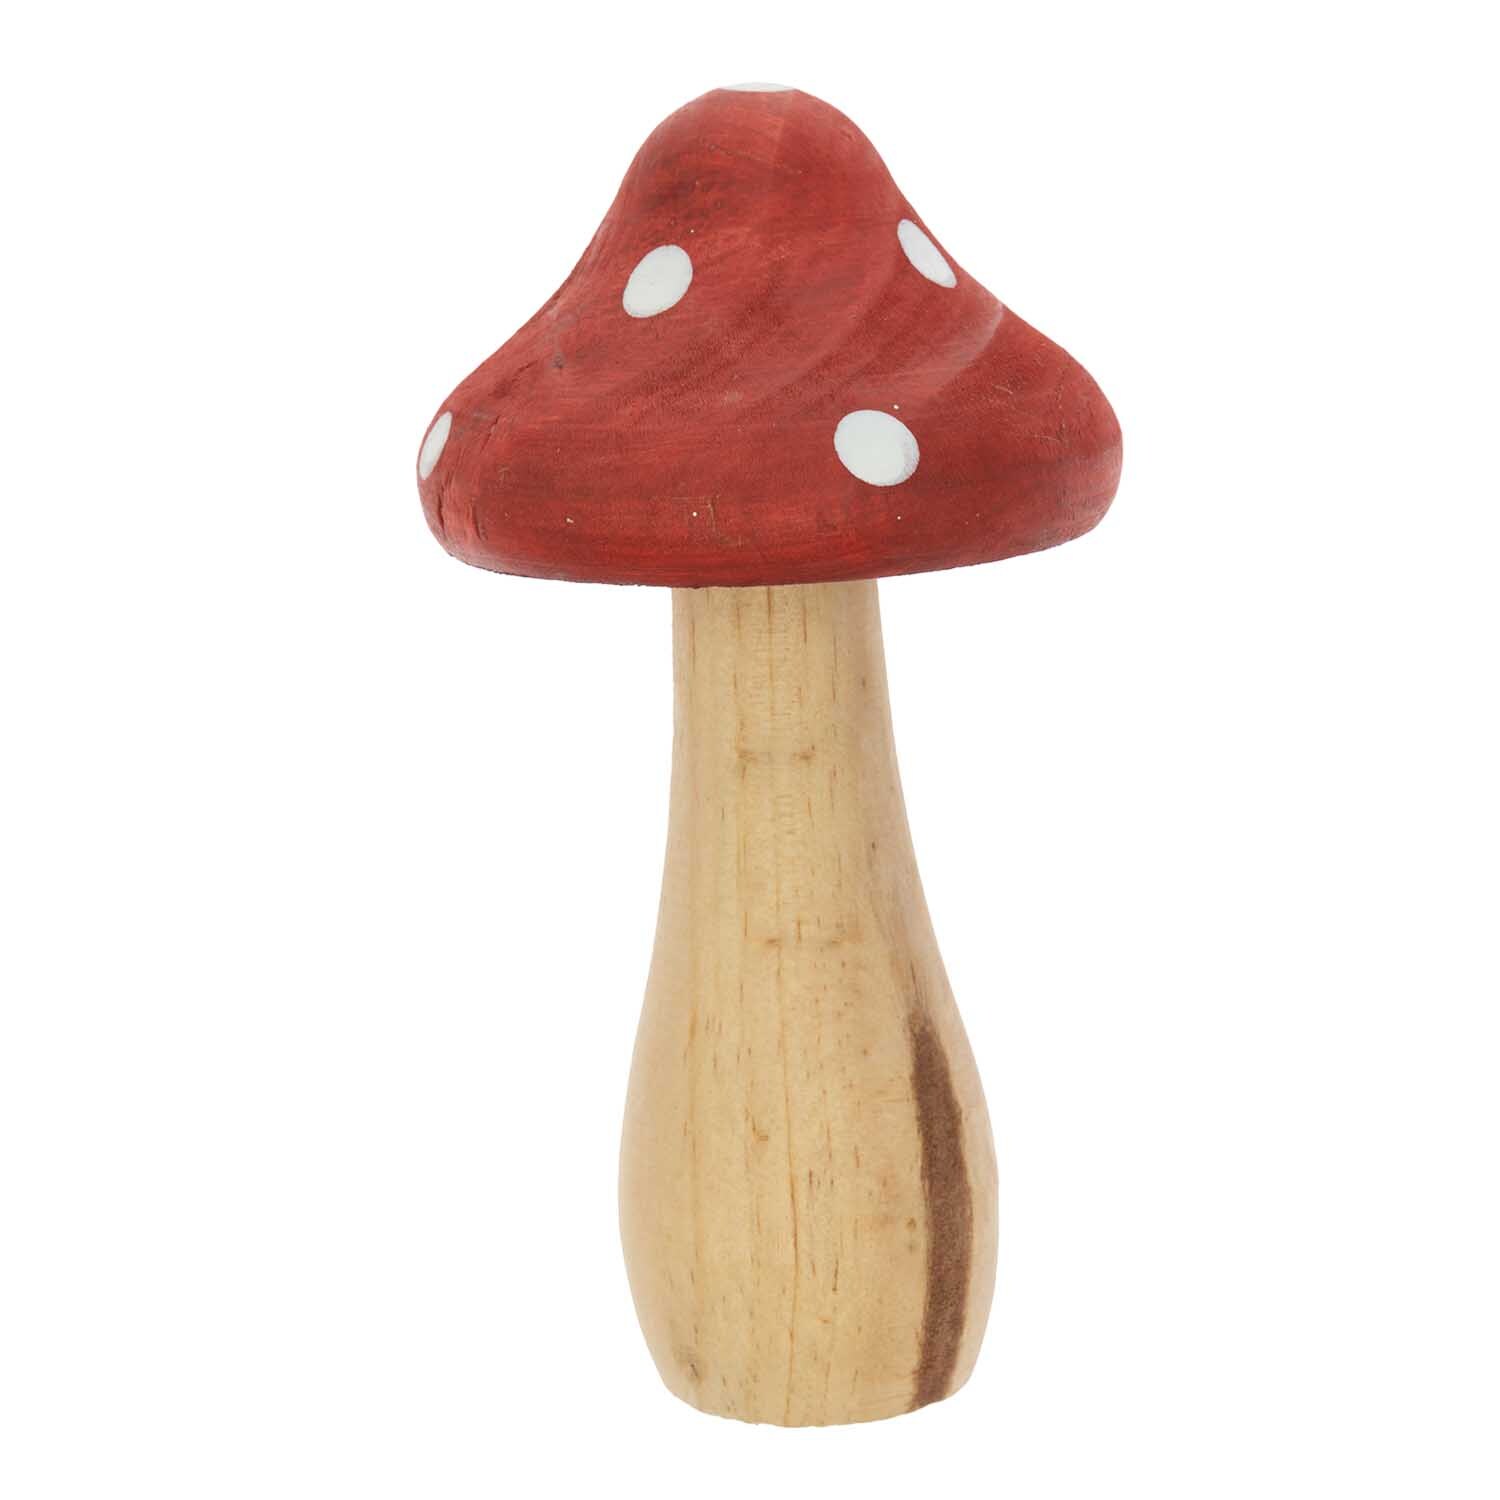 Deko-Pilz aus Holz rot-weiß